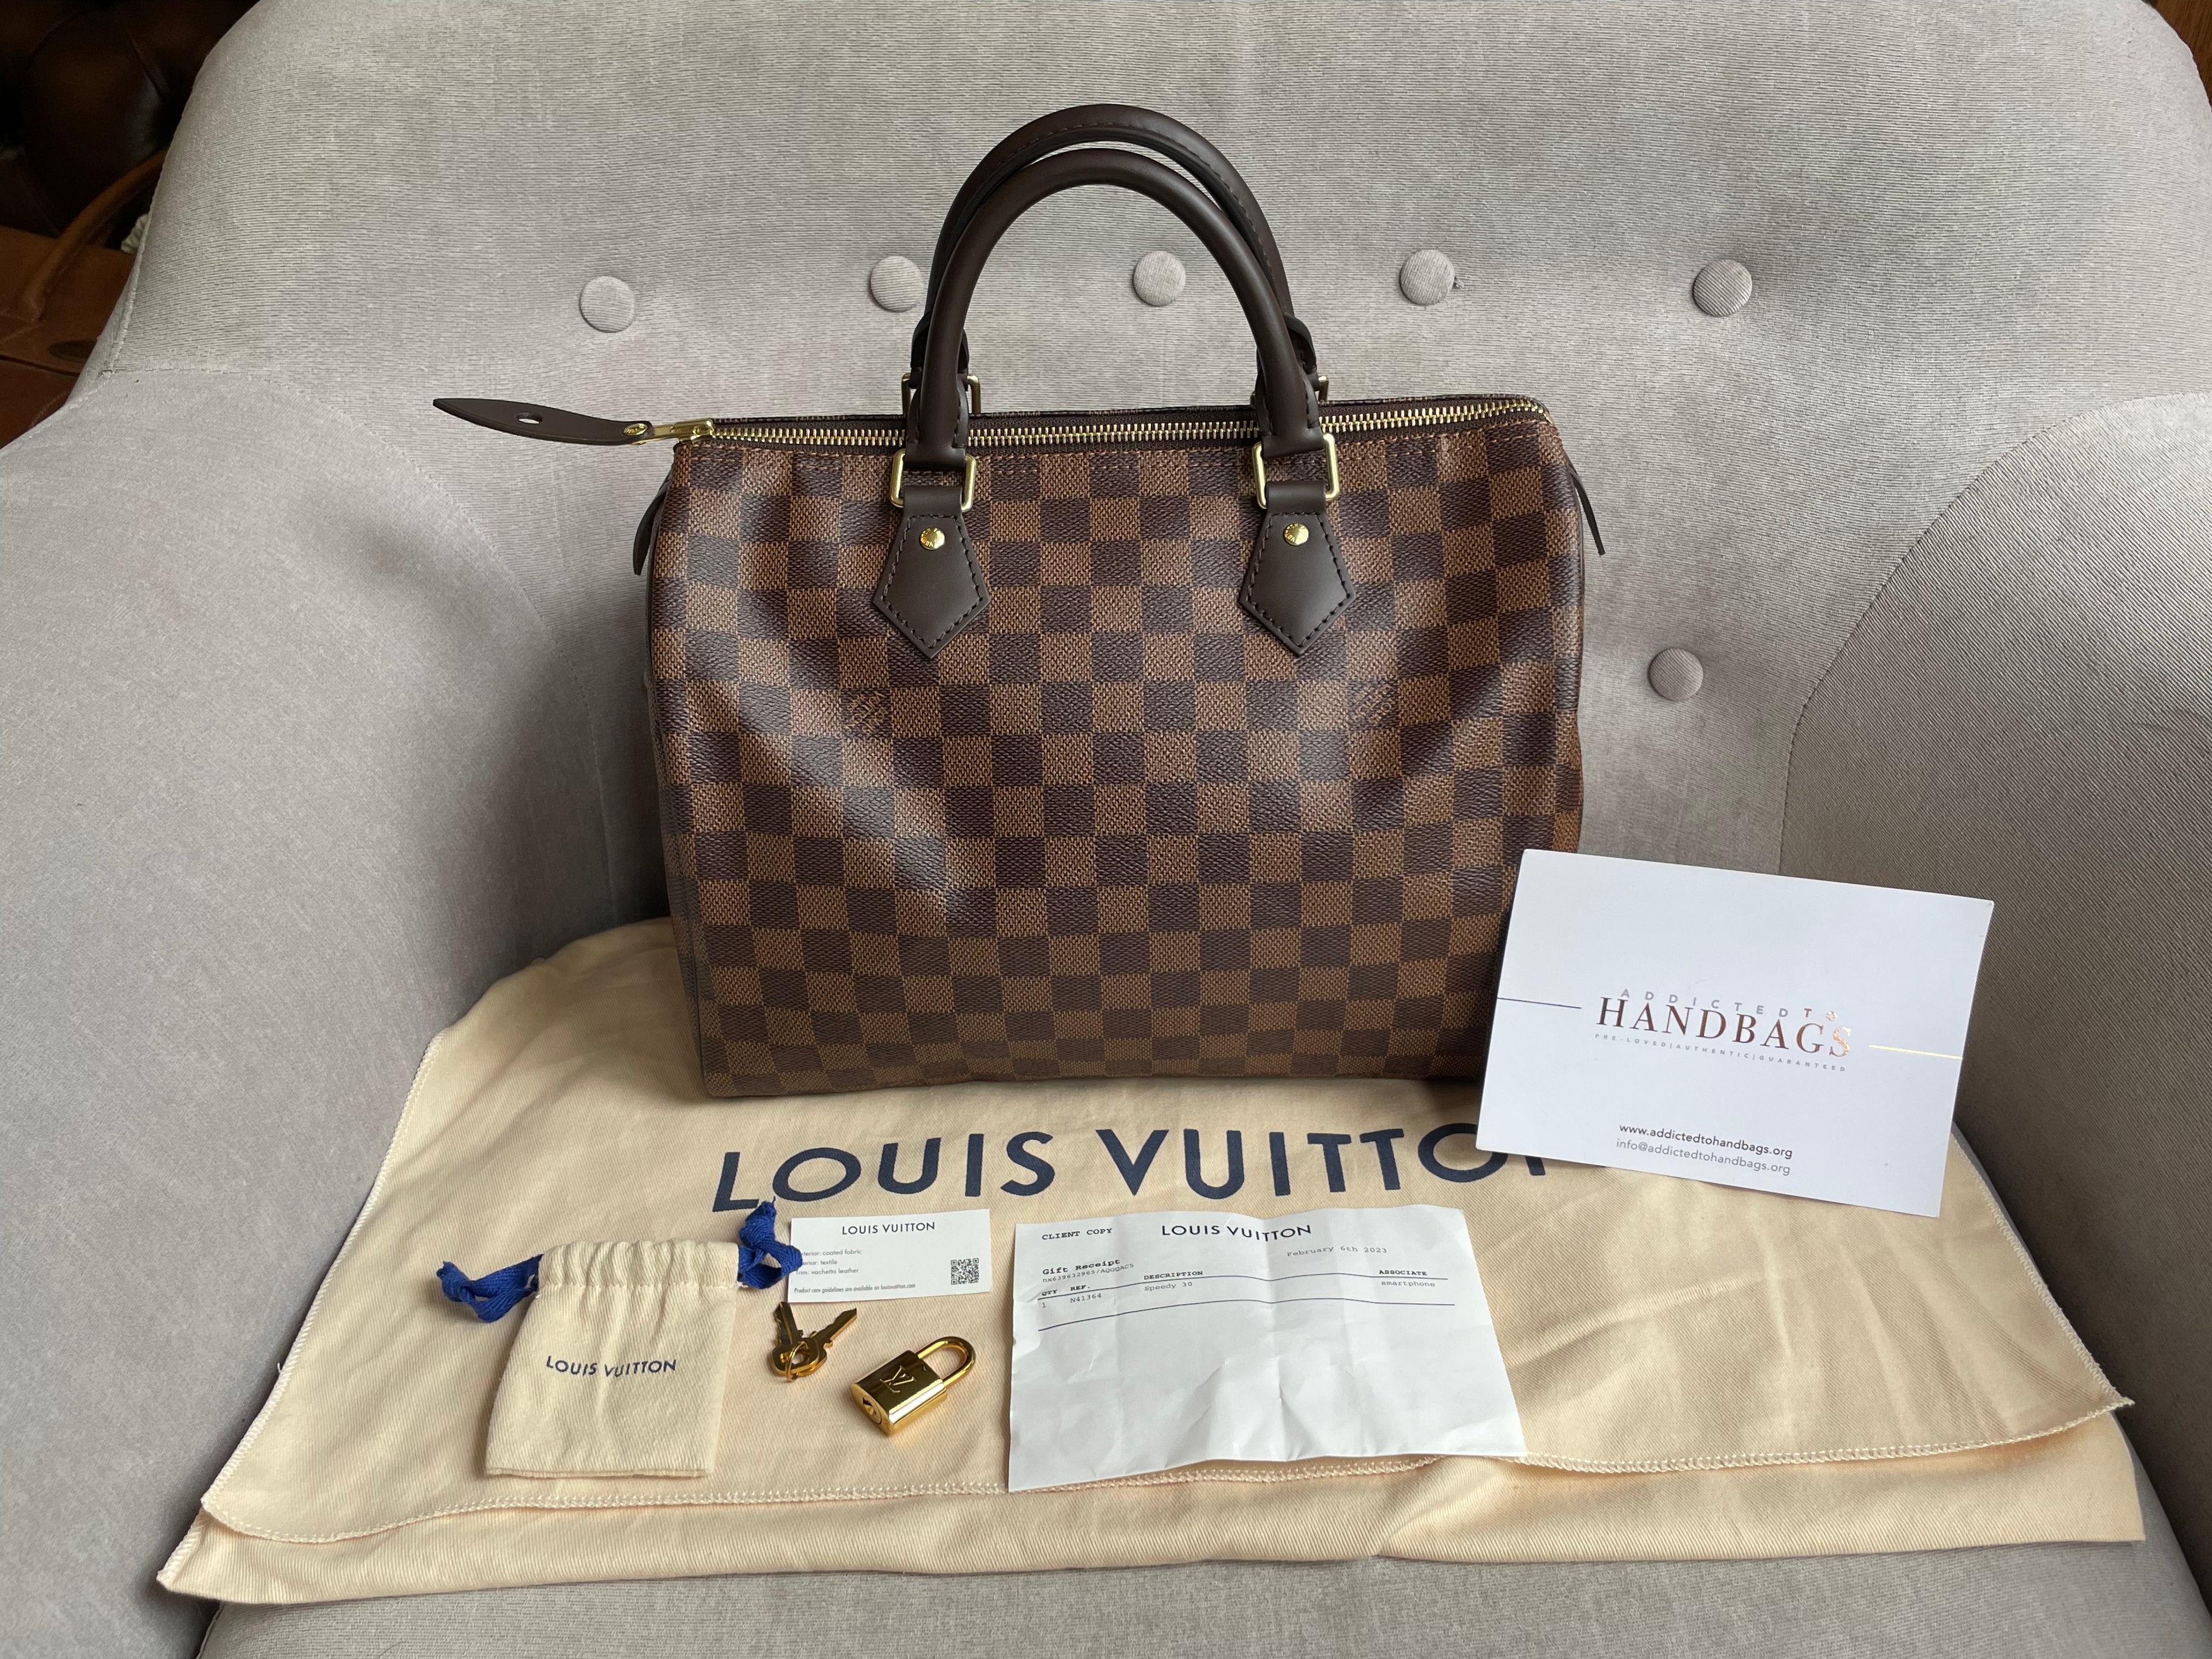 Luis Vuitton Speedy 30 Bandouliere Damier Ebene Print Crossbody Bag